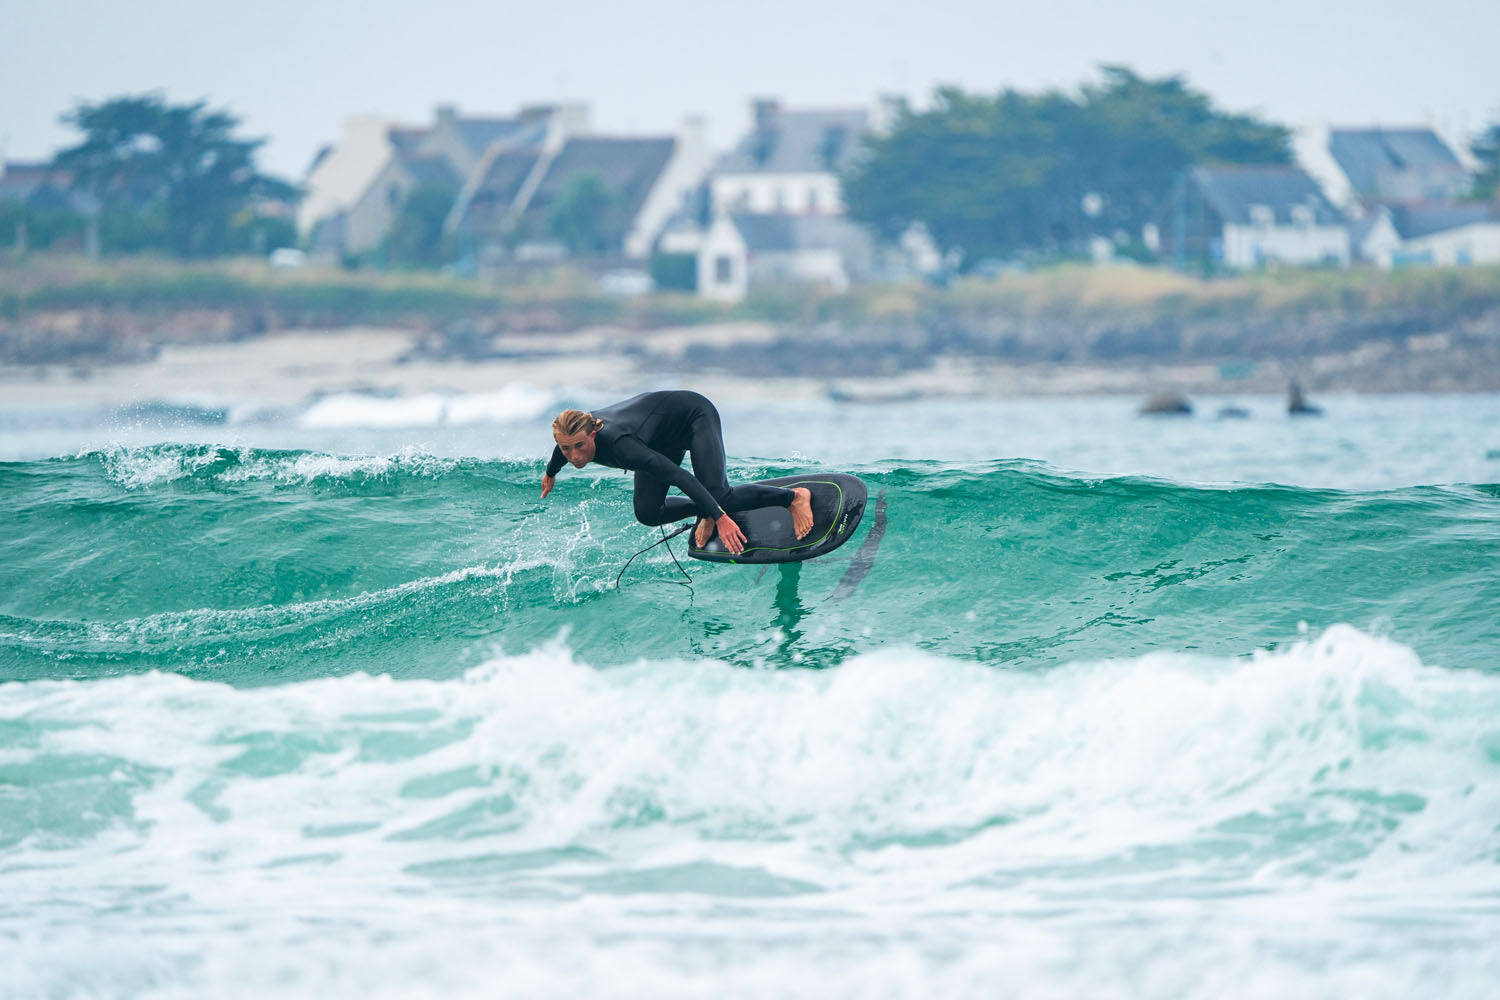 GONG | Surf Foil Board Matata EPS Pro